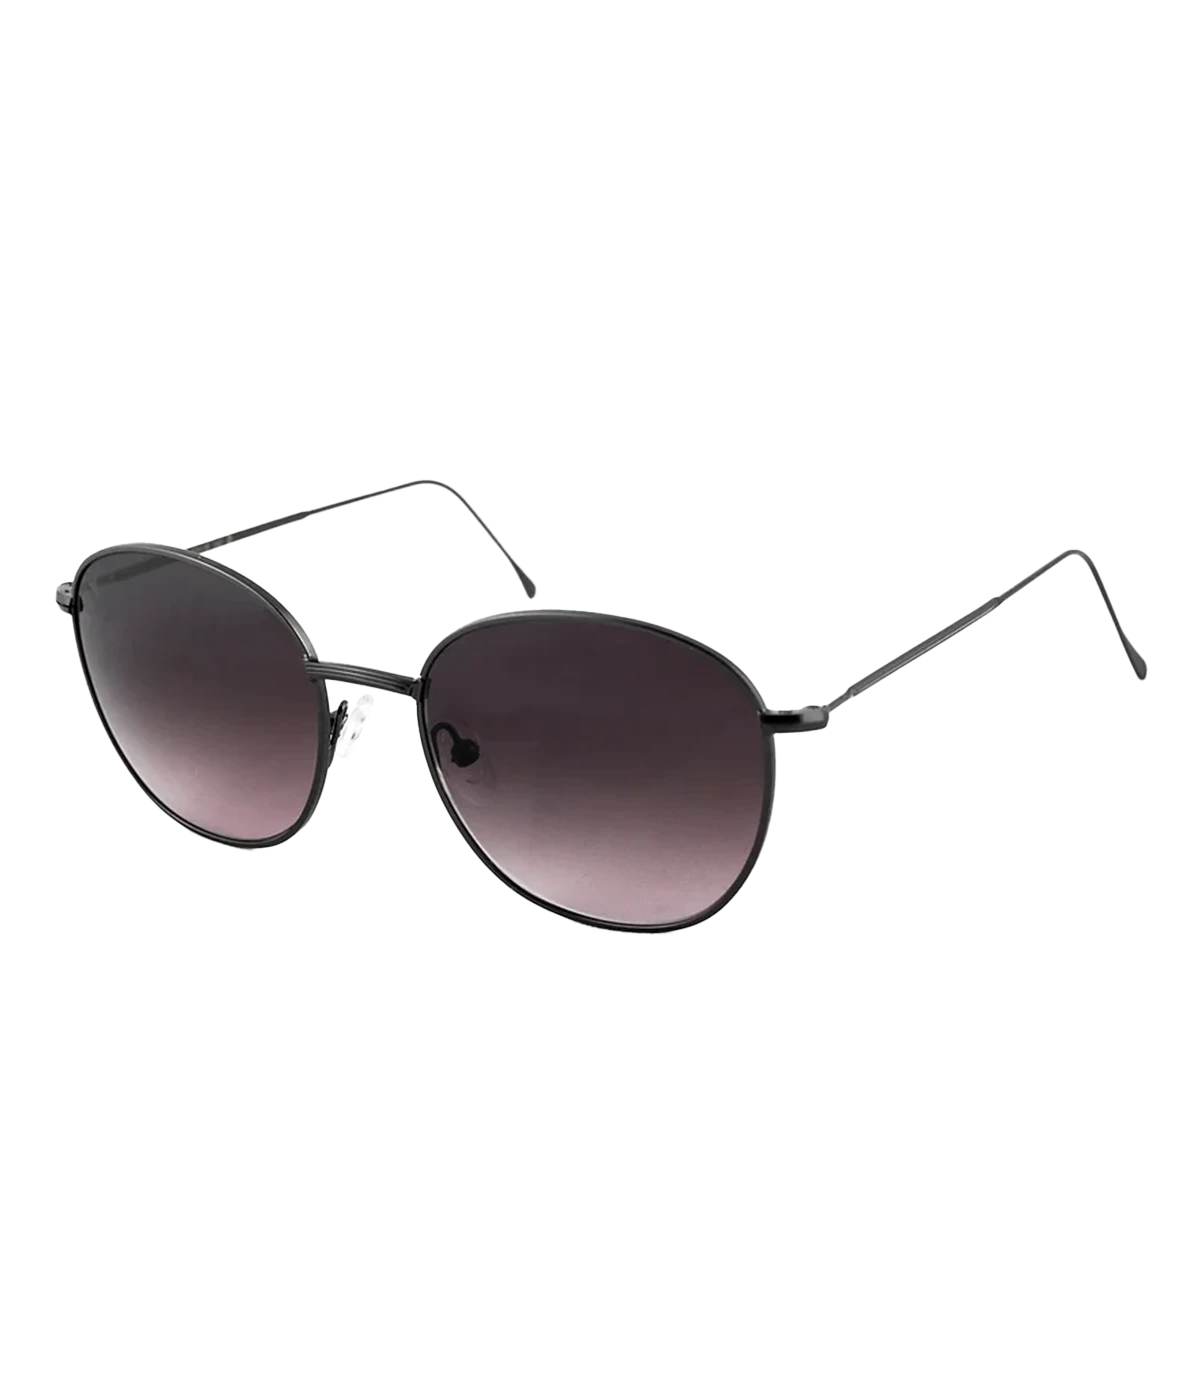 Maverick Sunglasses in Satin Shiny Black & Dark Purple Degrade